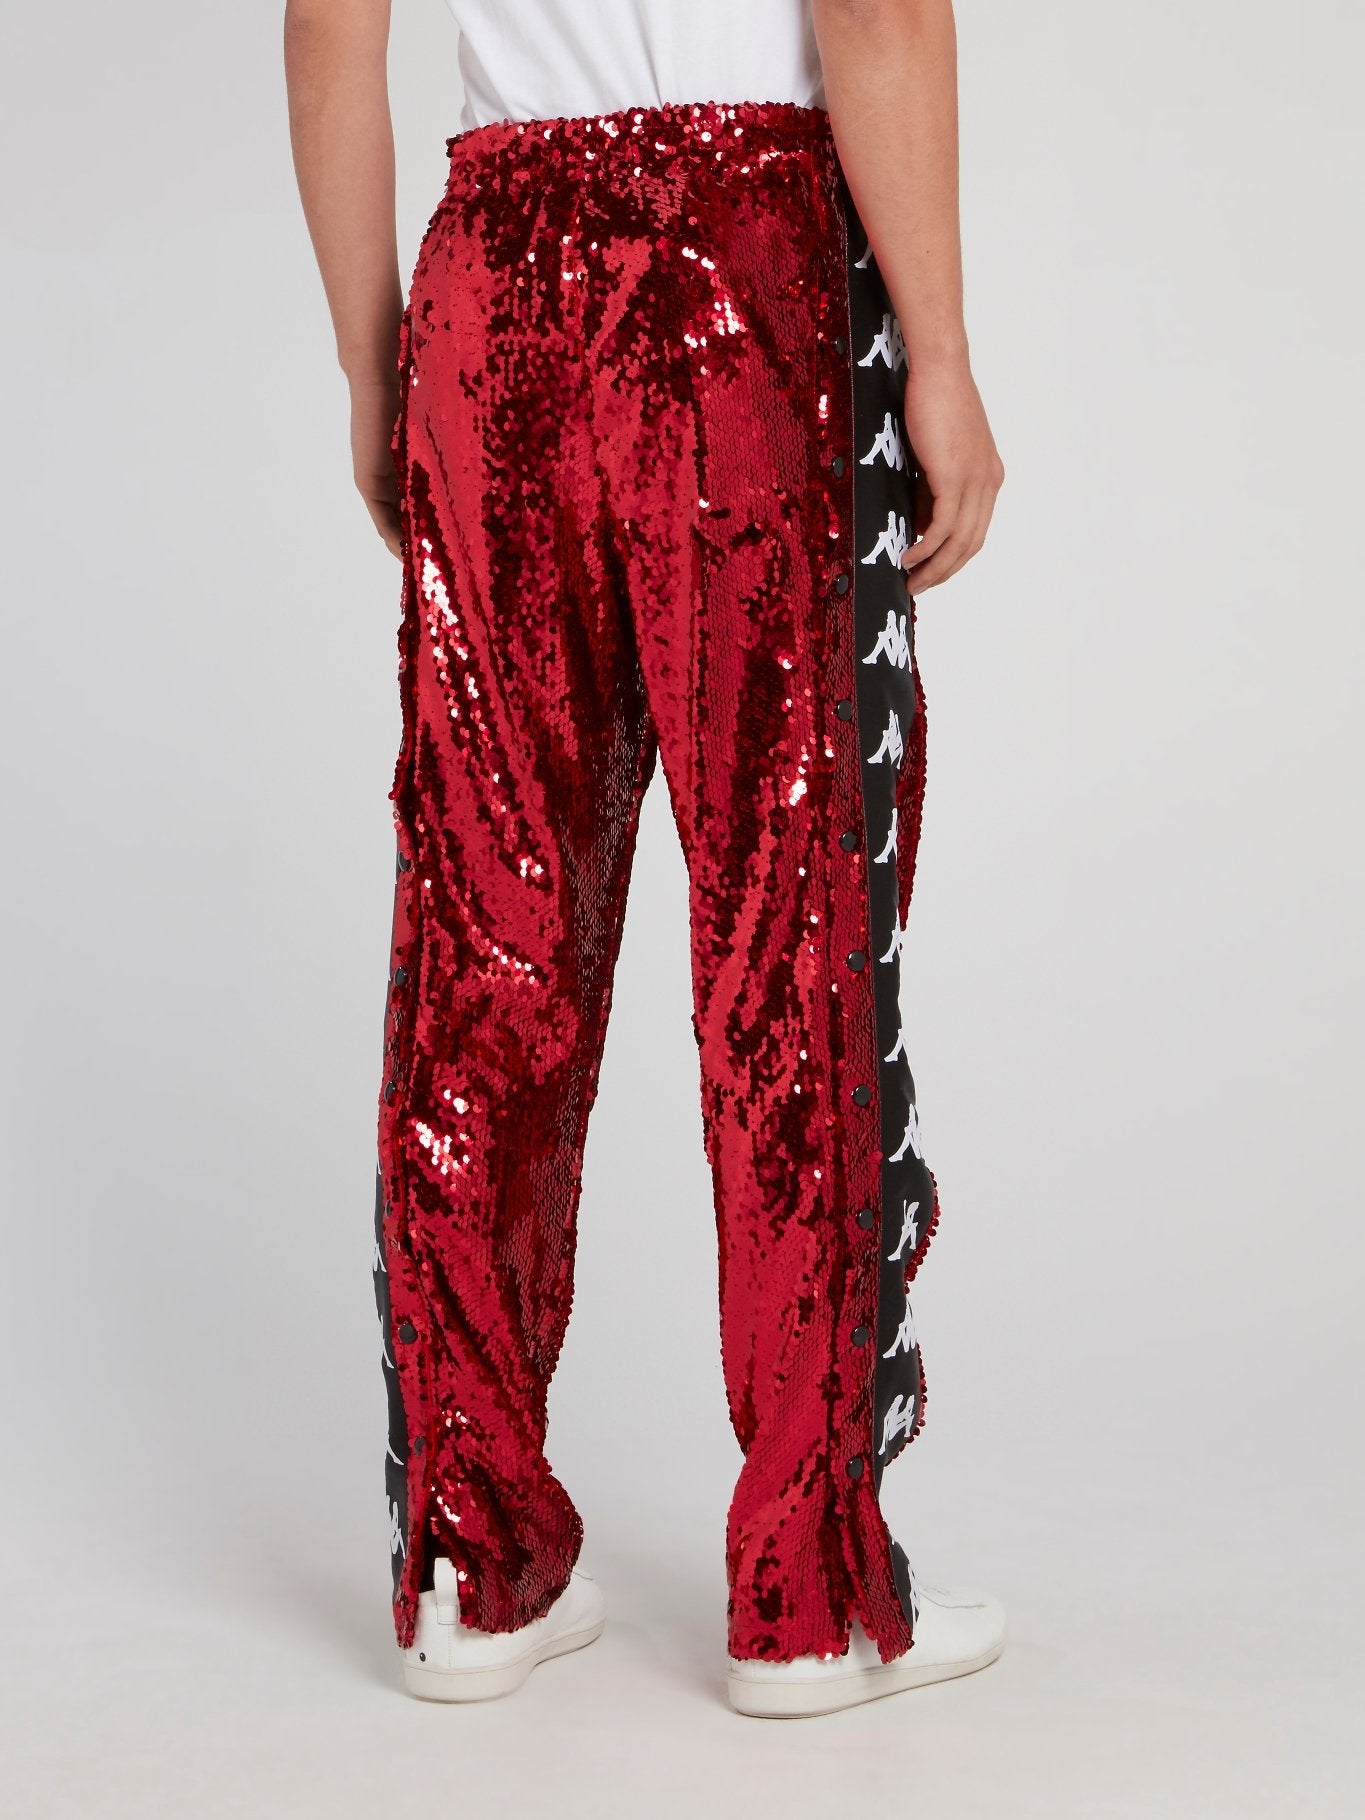 Mauve At redigere indeks Kappa Red Sequin Pants – Maison-B-More Global Store